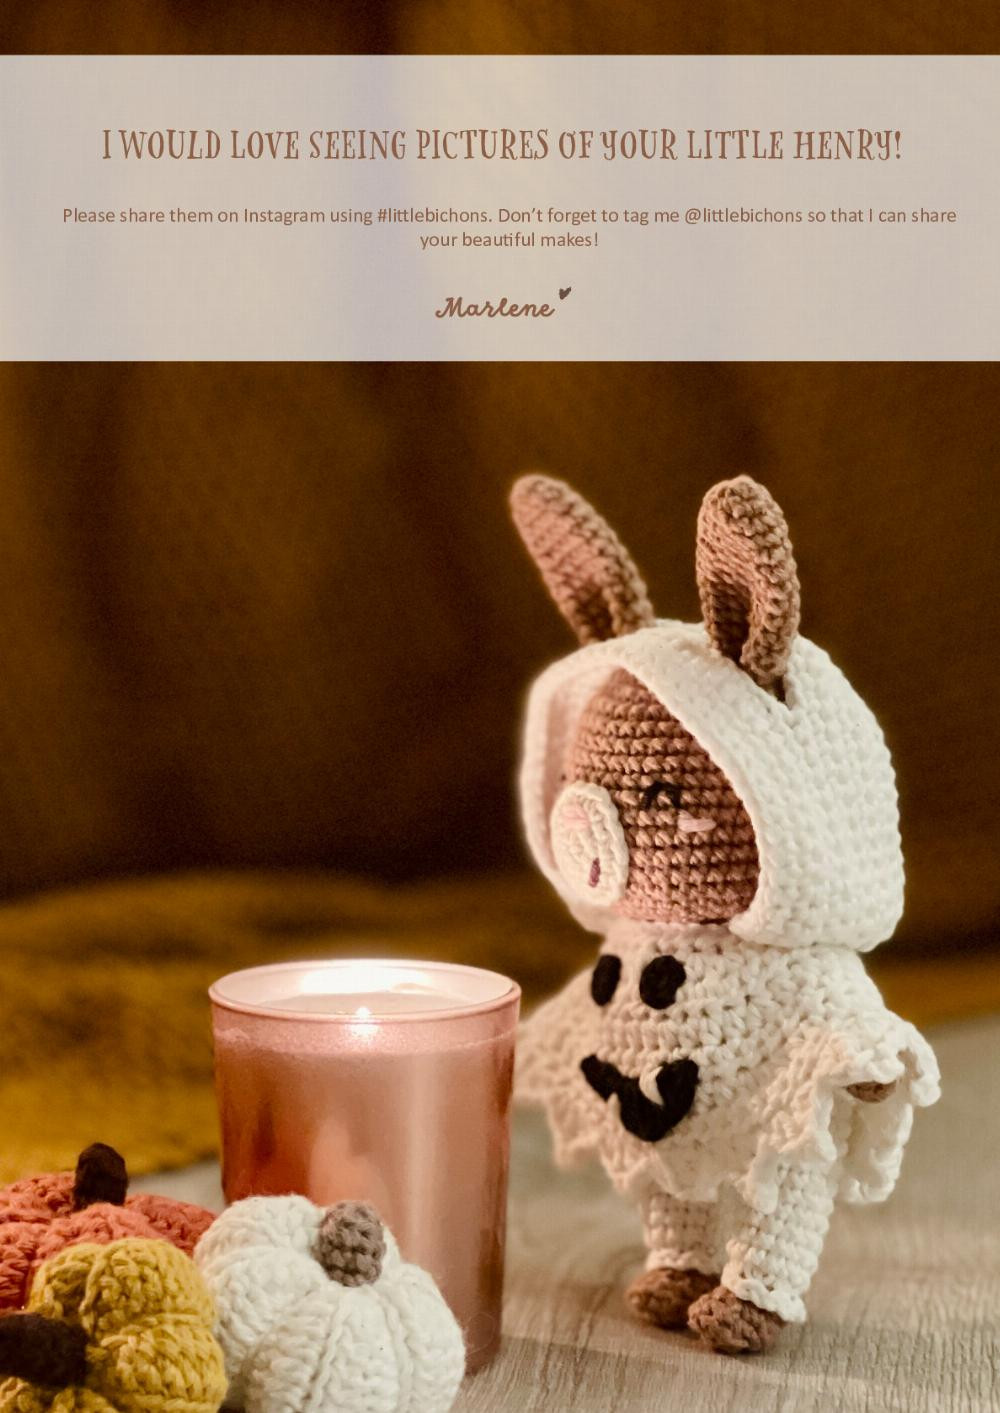 HENRY the ghost bunny crochet tutorial